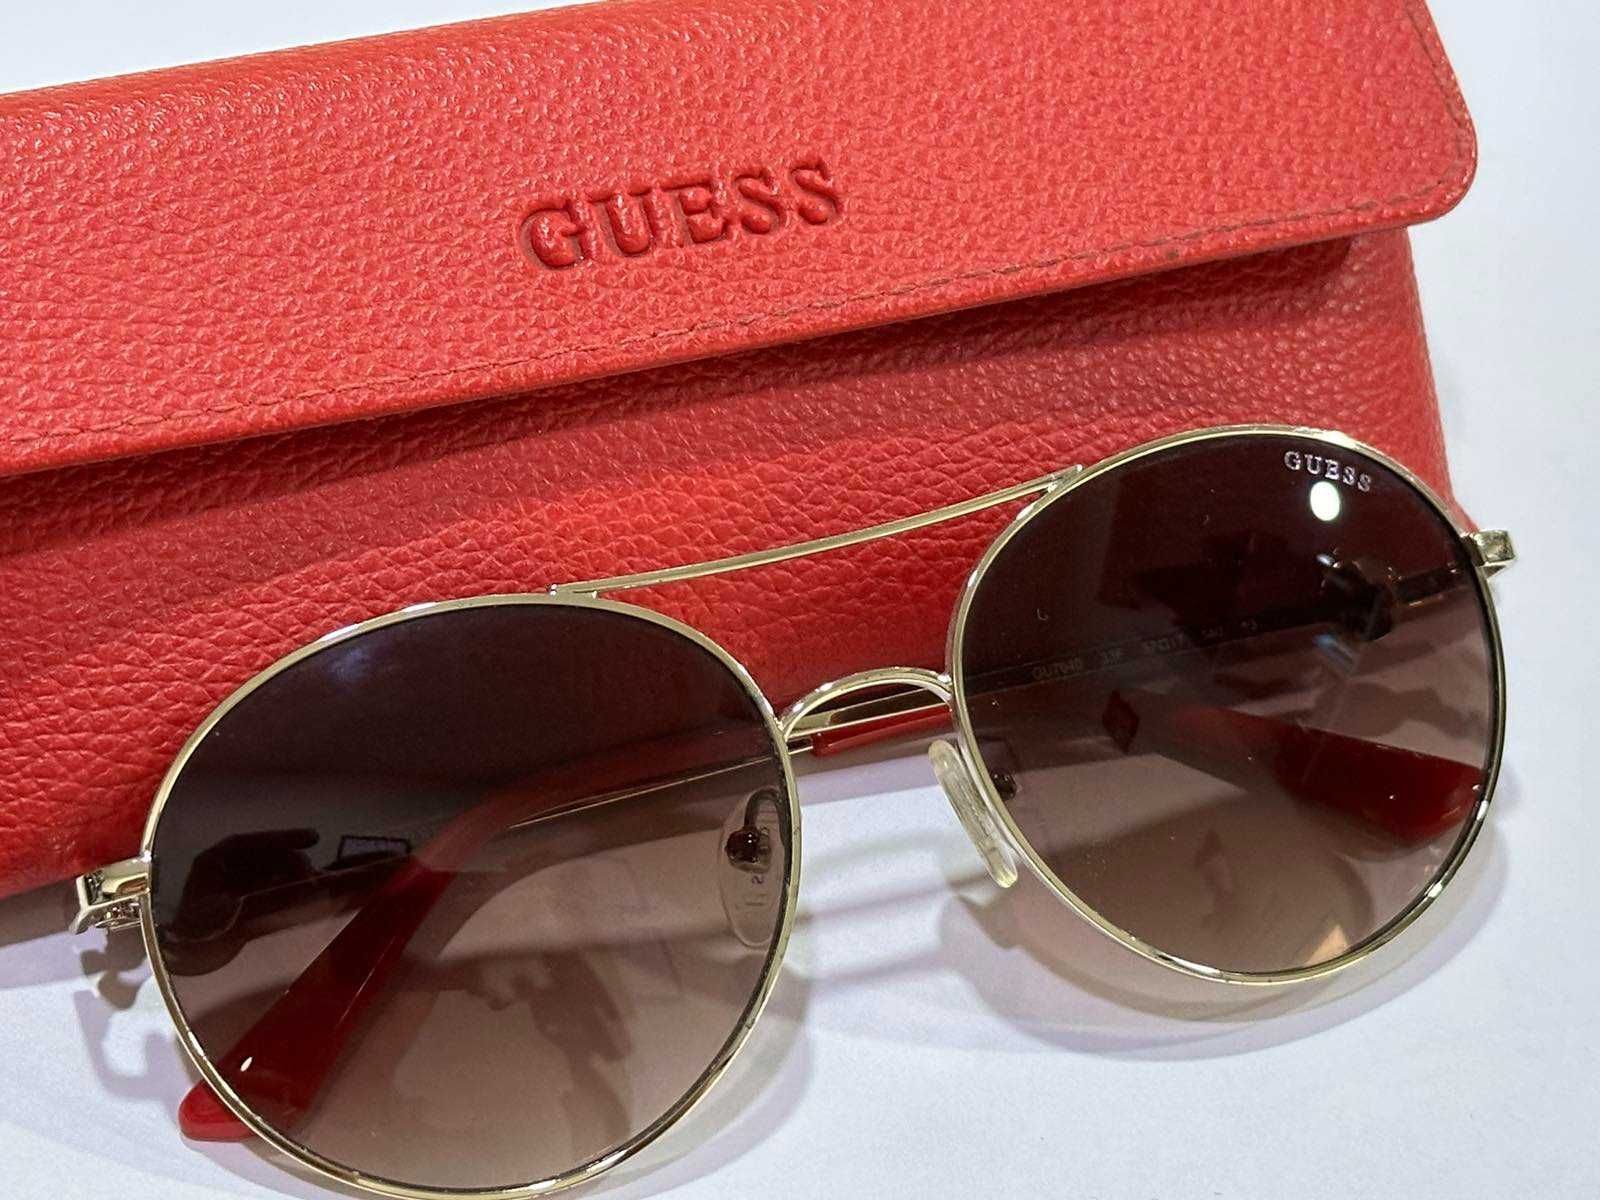 Слънчеви очила Guess GU7640 33F